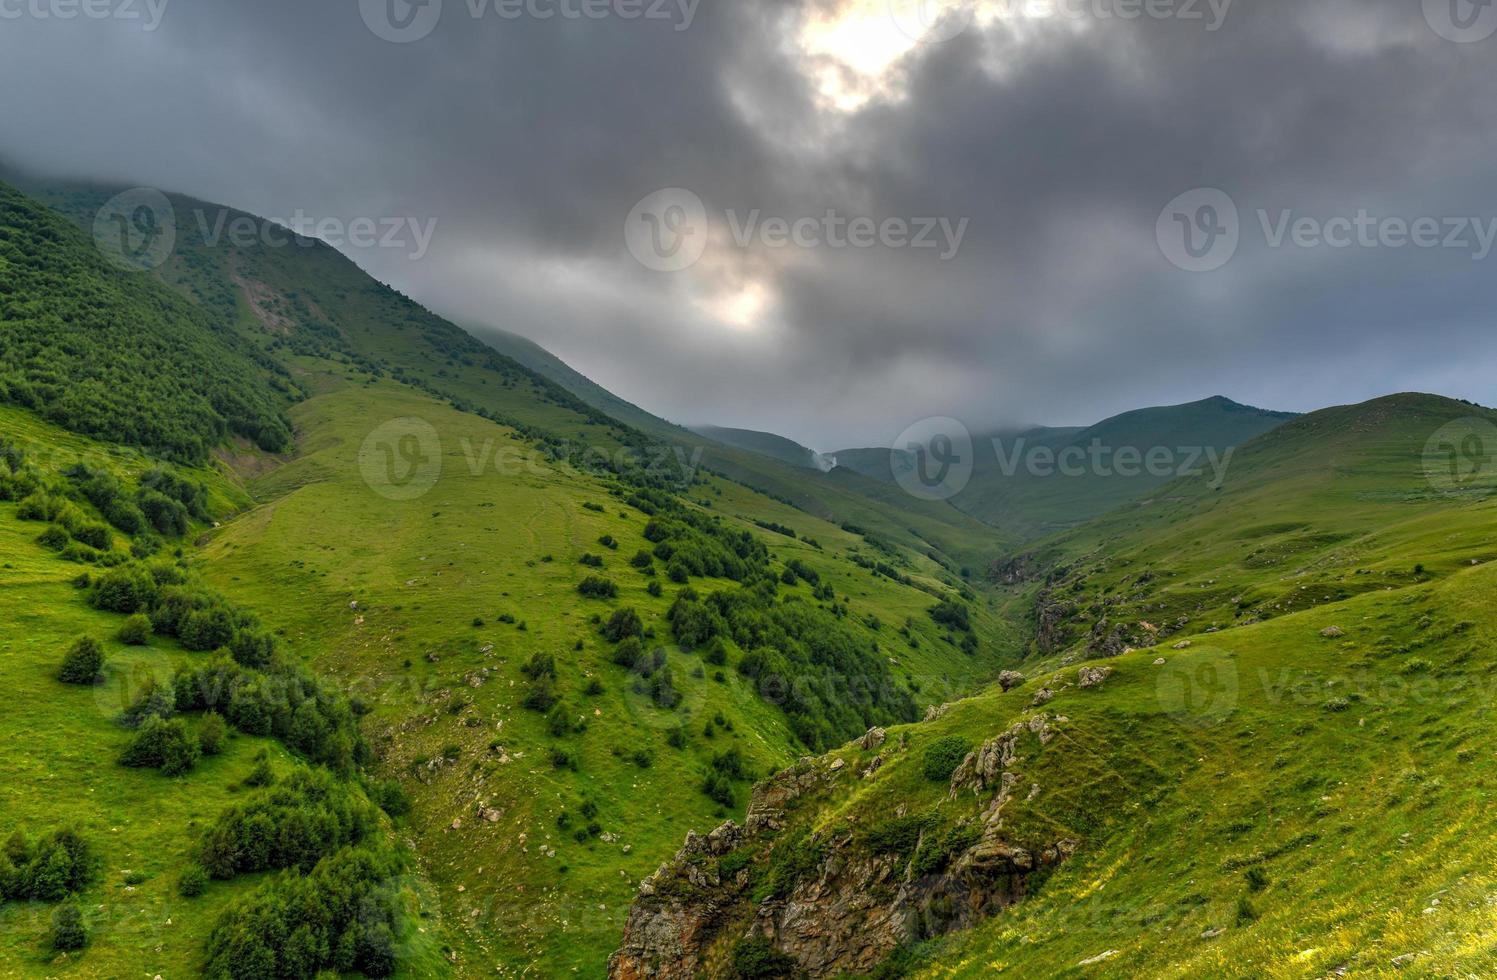 Hilly landscape near the village of Gergeti in Georgia, under Mount Kazbegi. photo